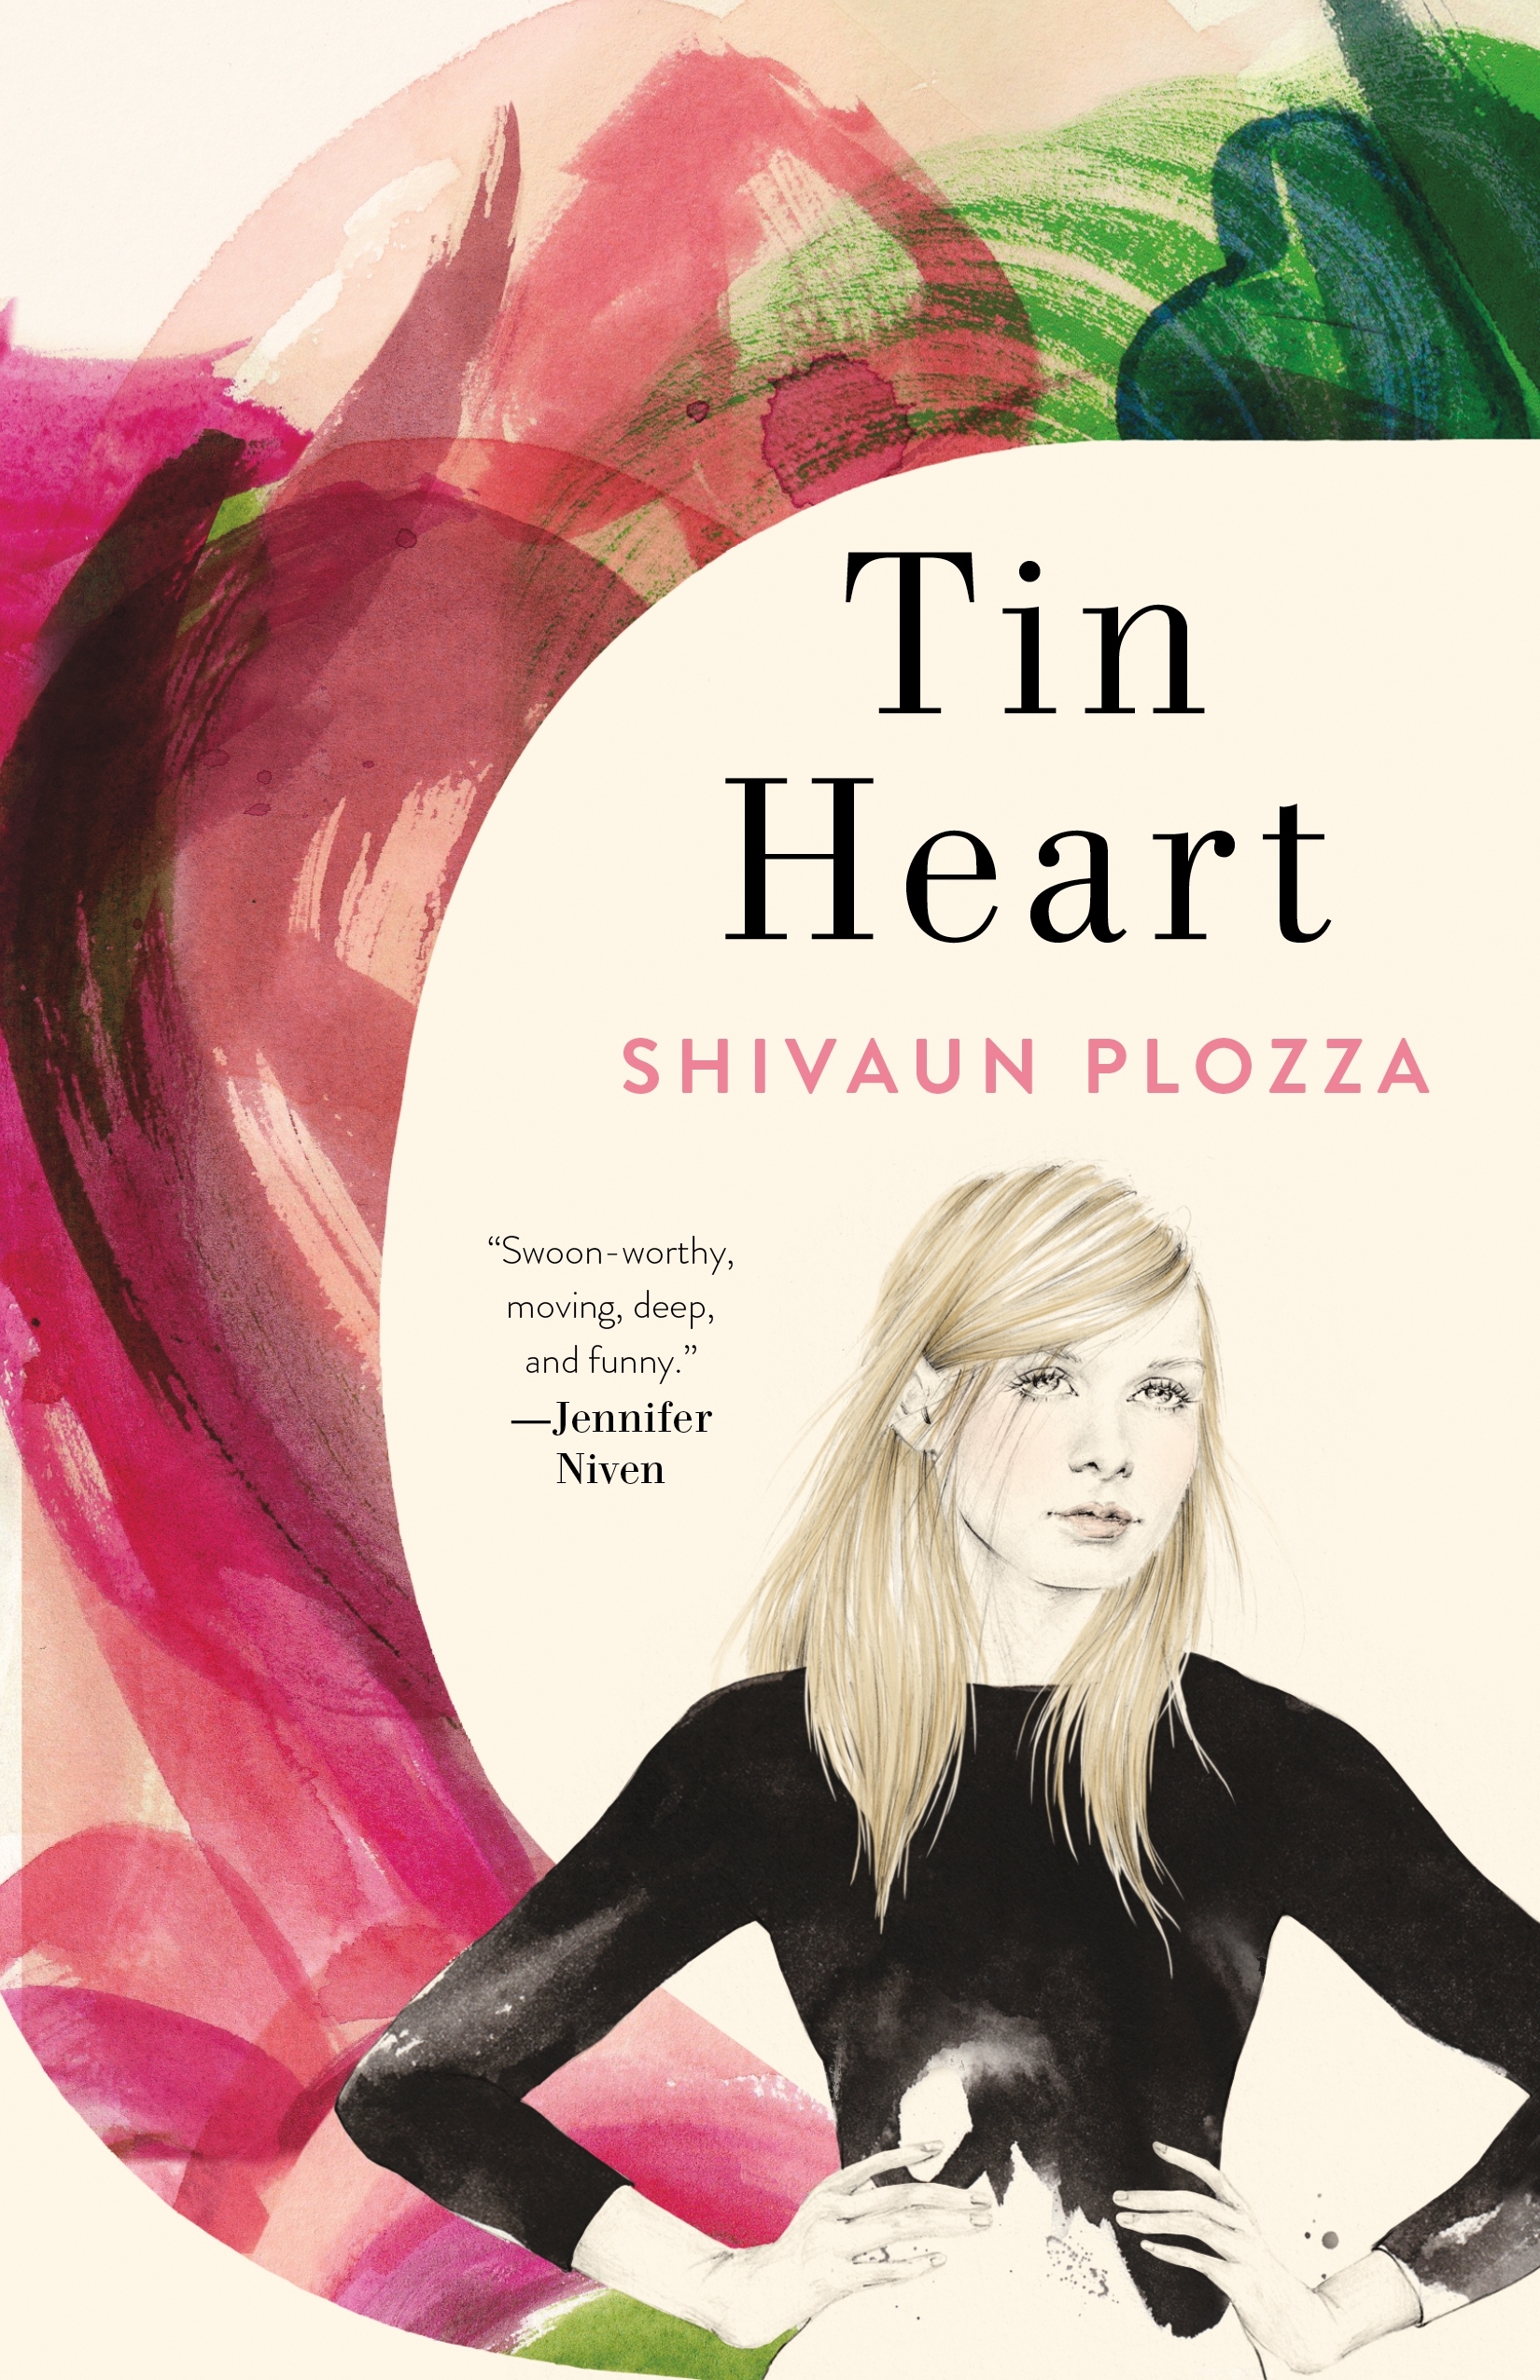 Book “Tin Heart” by Shivaun Plozza — April 14, 2020